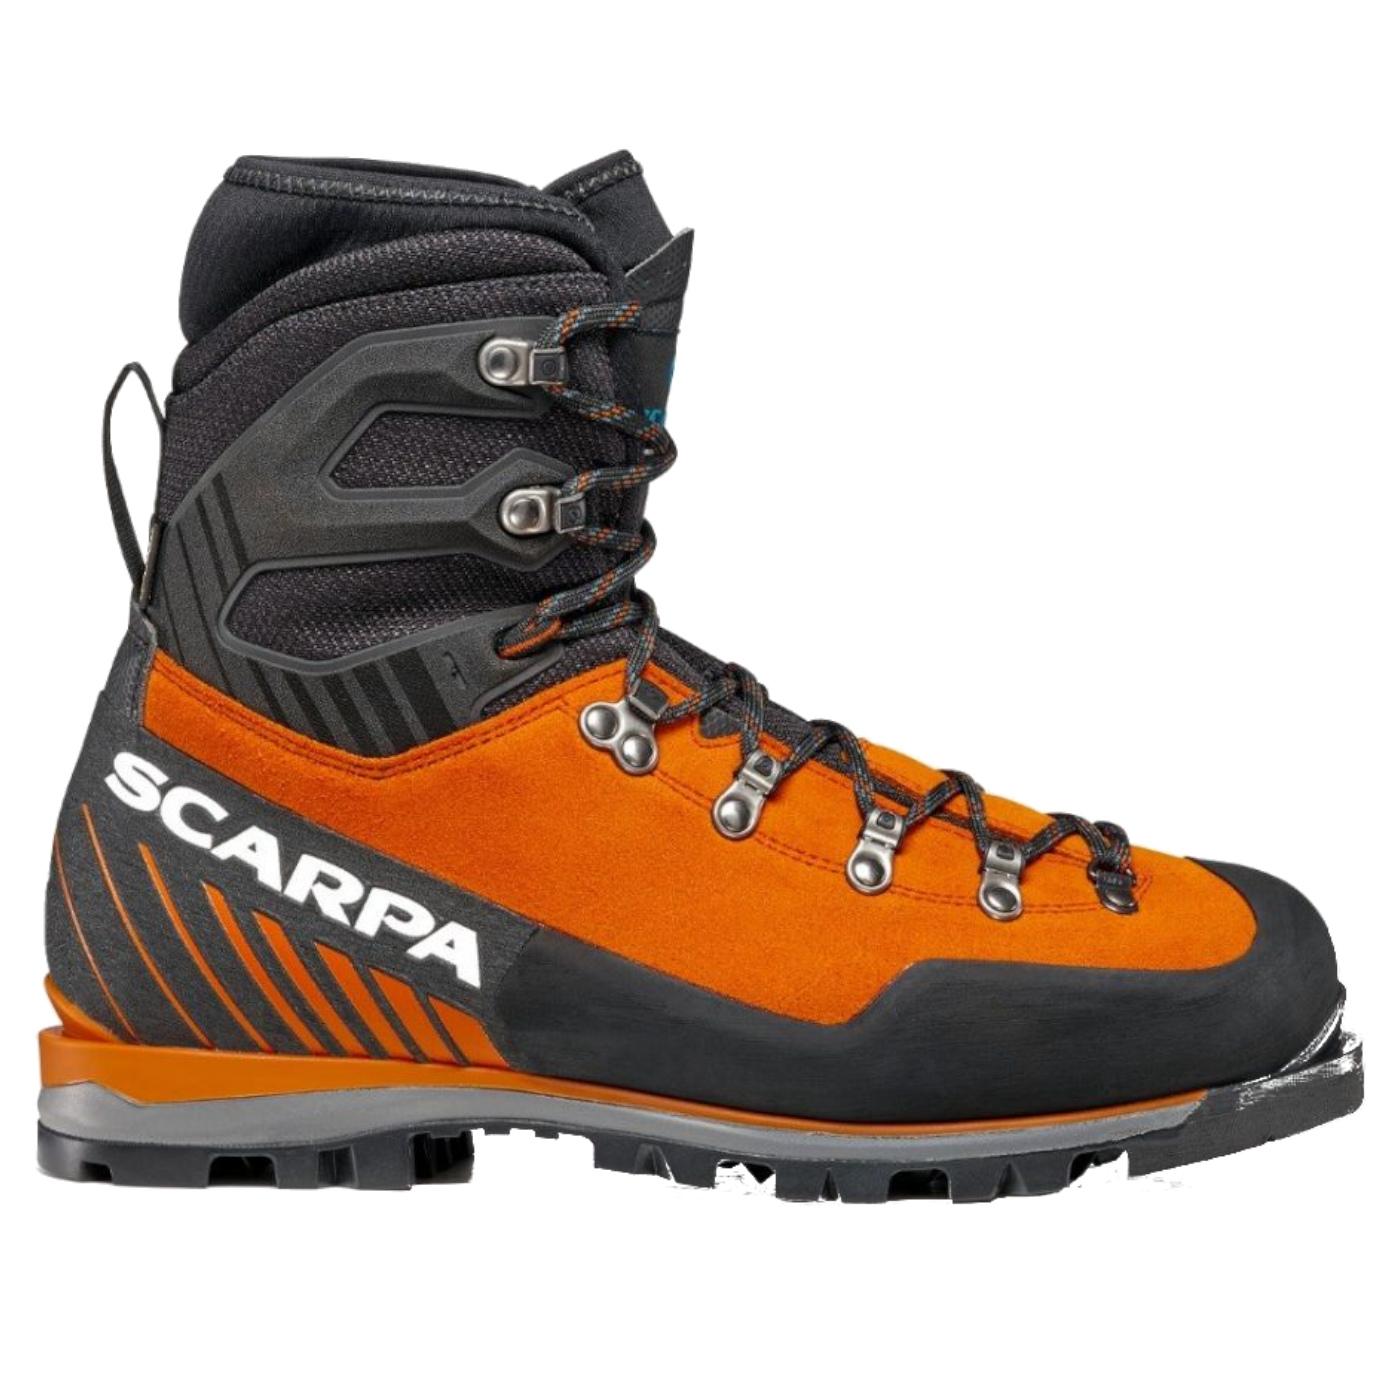 Scarpa Mont Blanc Pro GTX Size 43.5 Mountaineering Boot